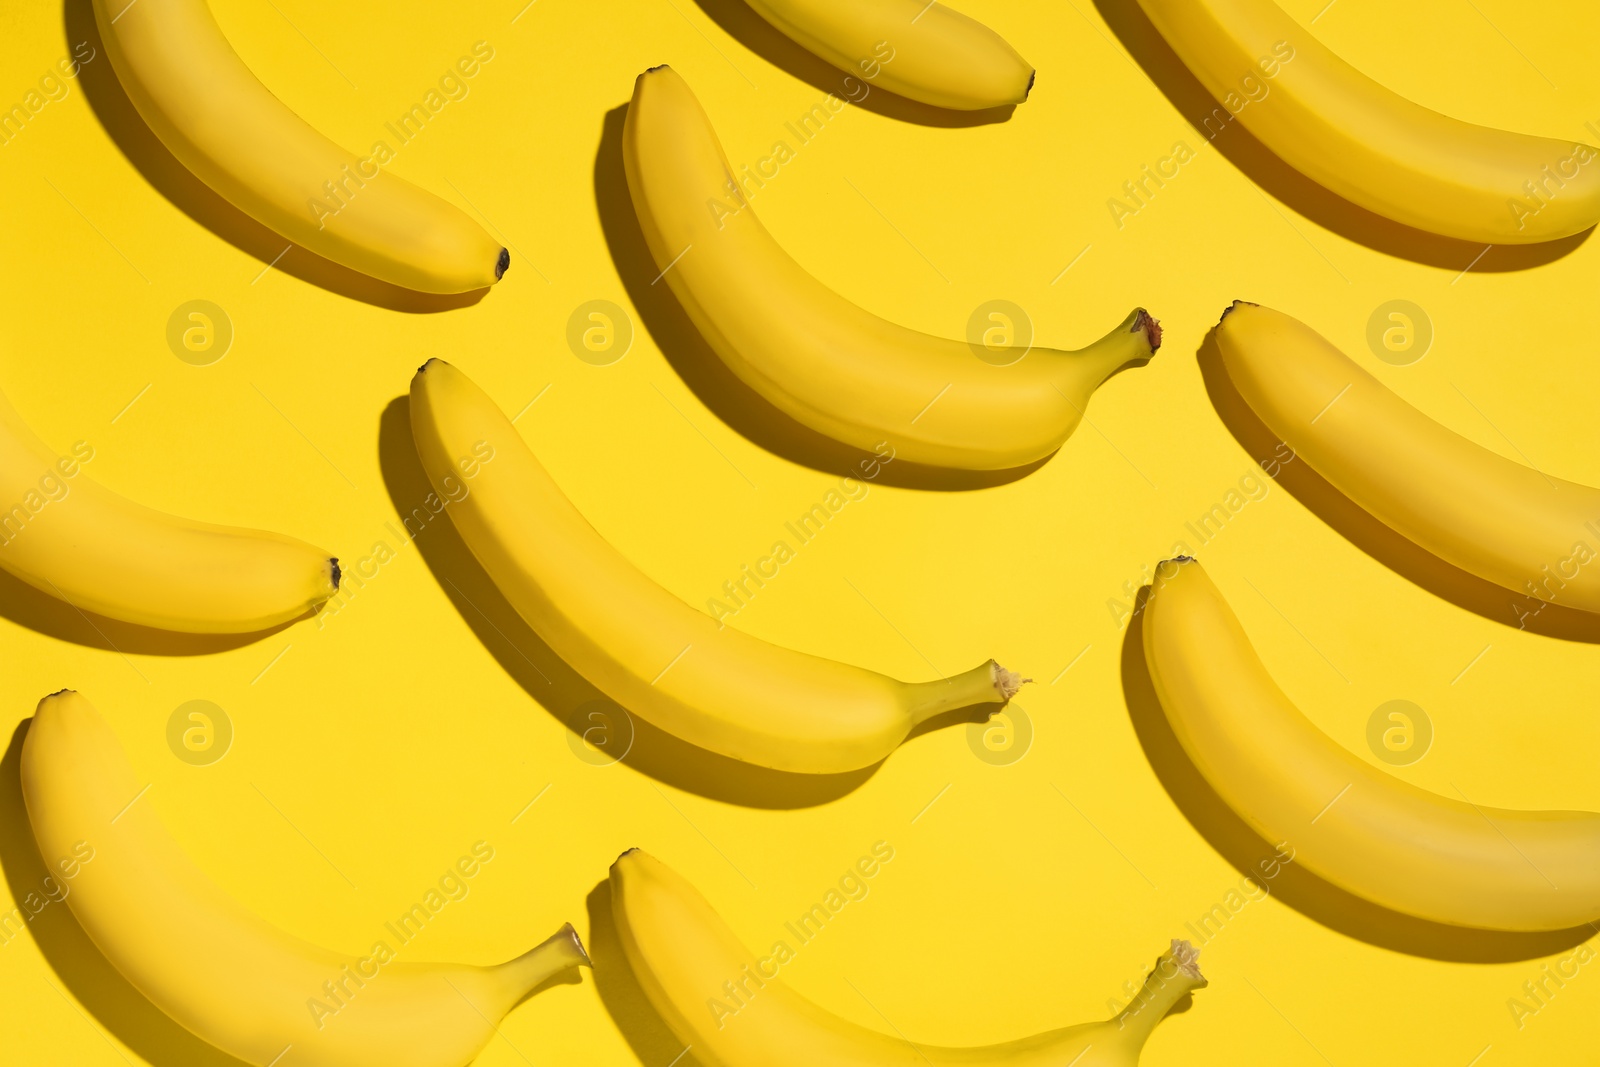 Photo of Ripe sweet bananas on yellow background, flat lay